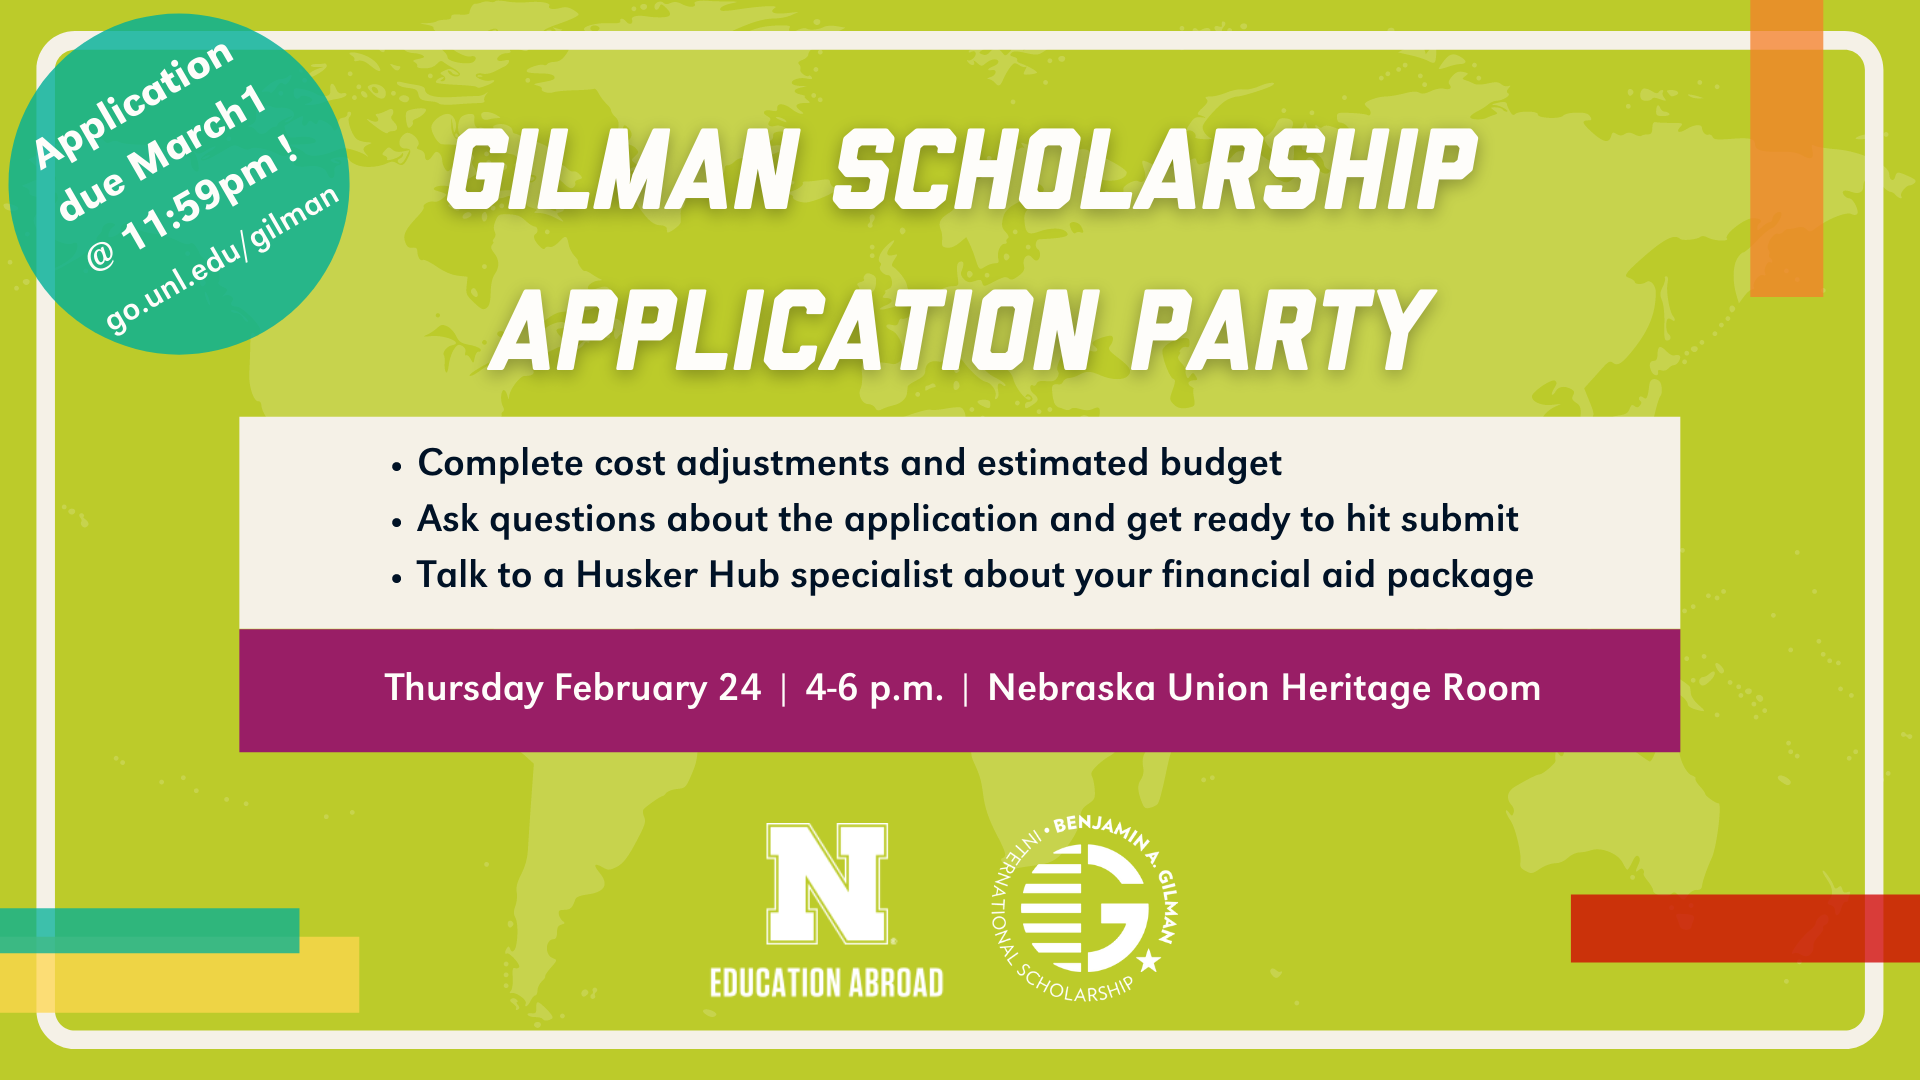 Gilman Scholarship Application Party - 2/24